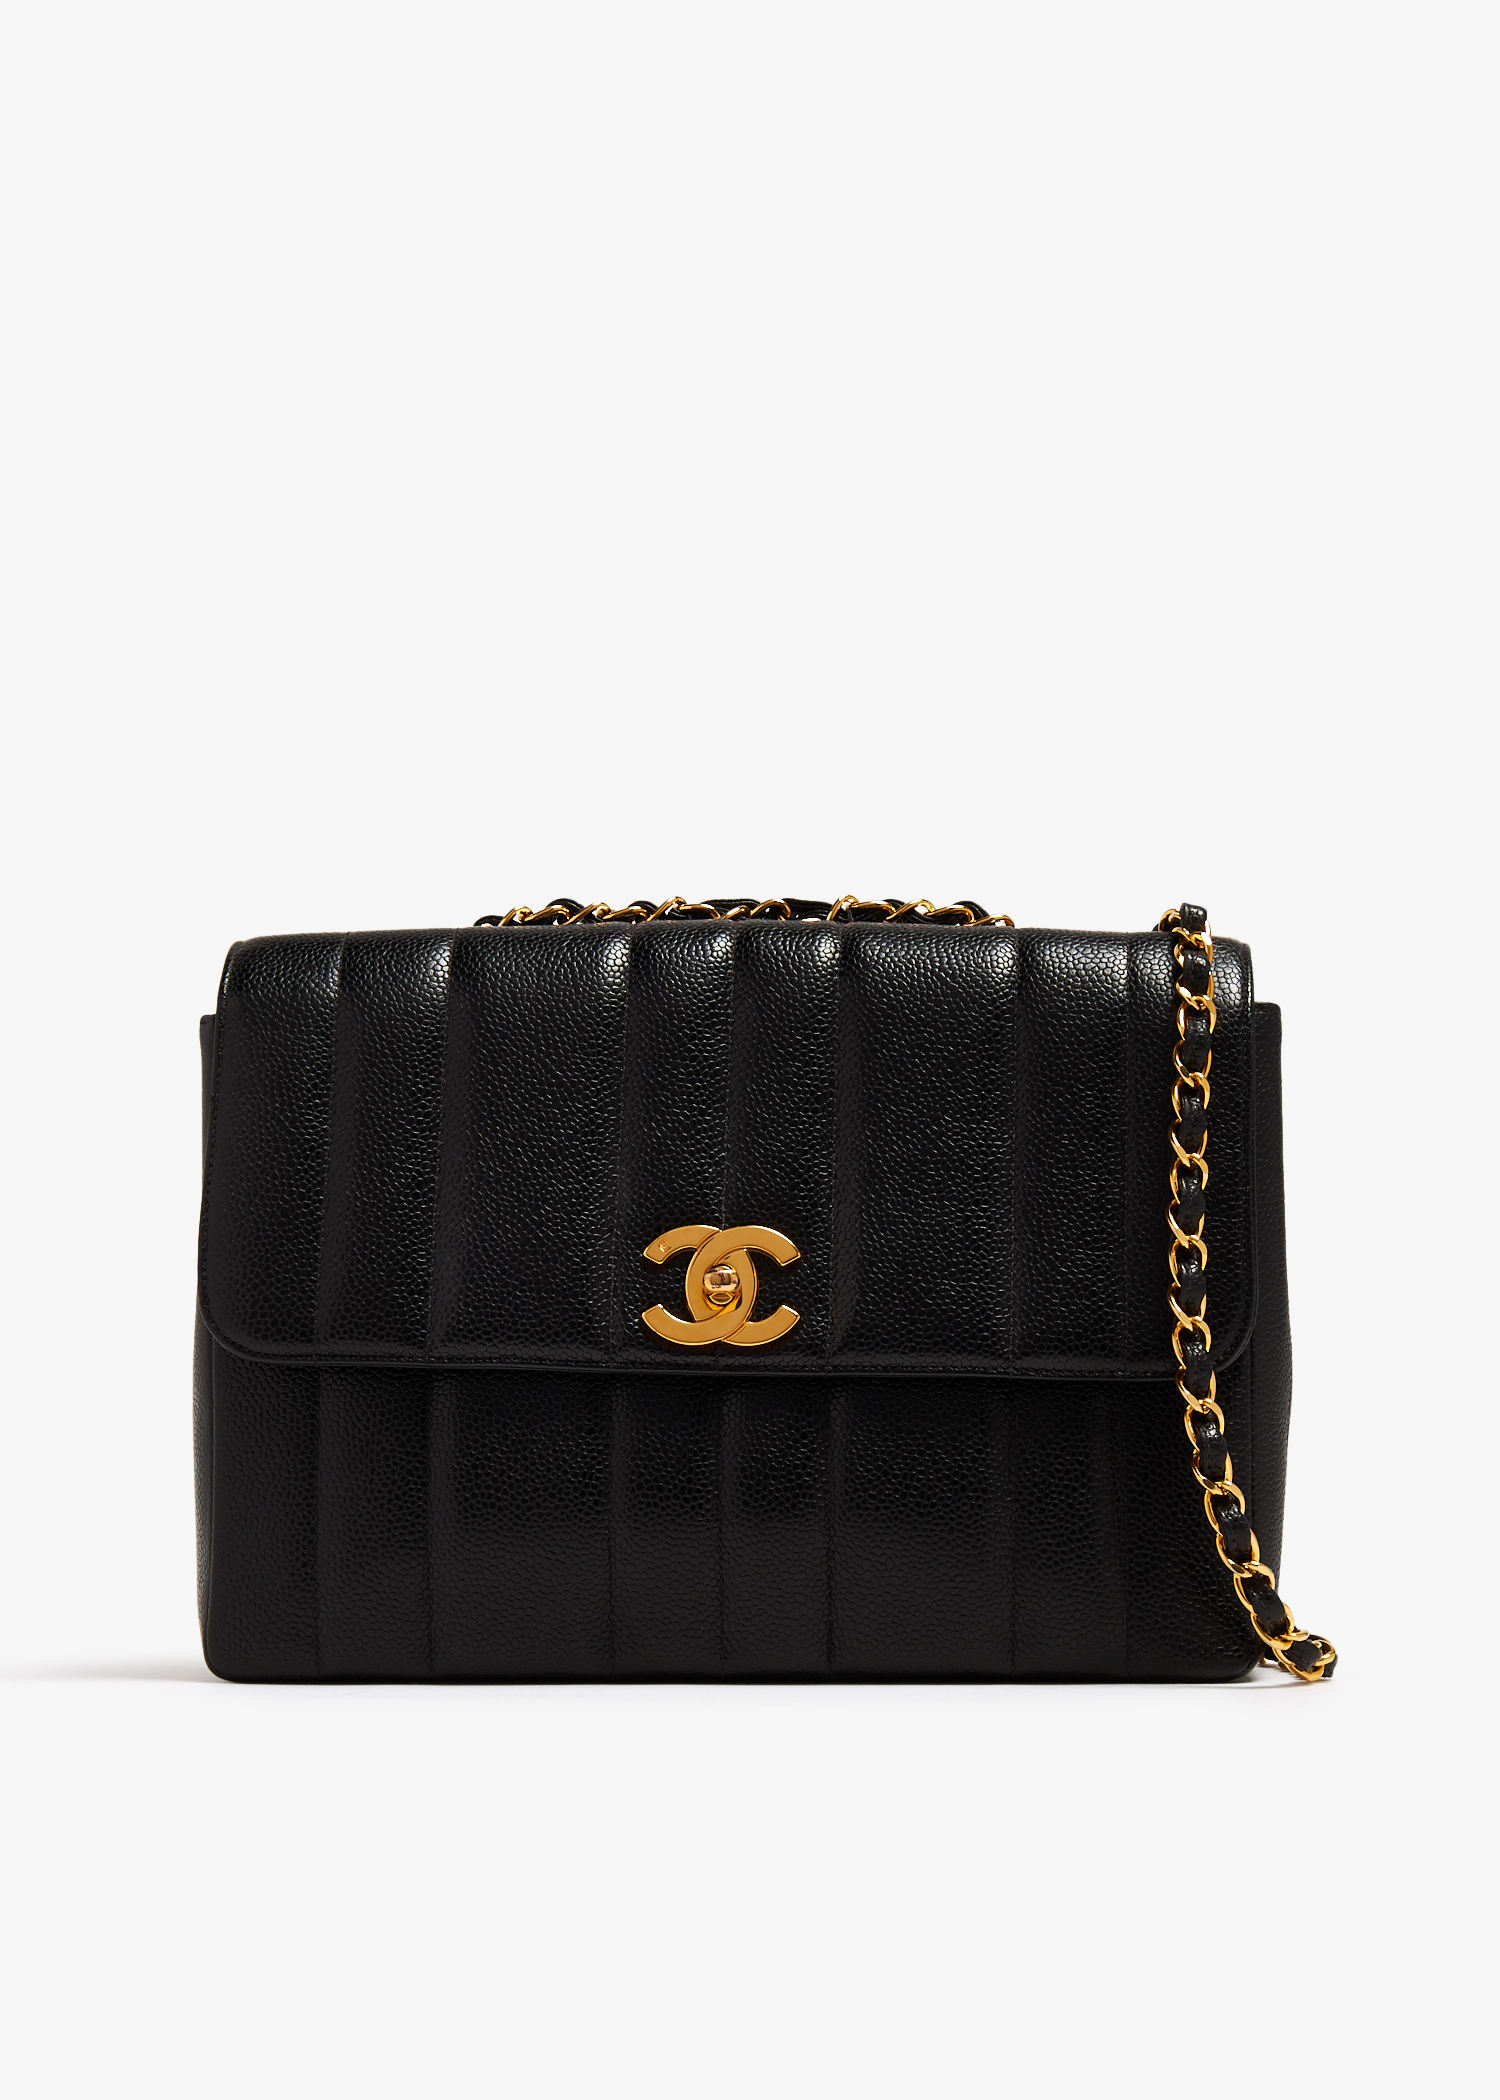 Chanel Pre-Loved Mademoiselle Classic Single Flap bag for Women - Black in  UAE